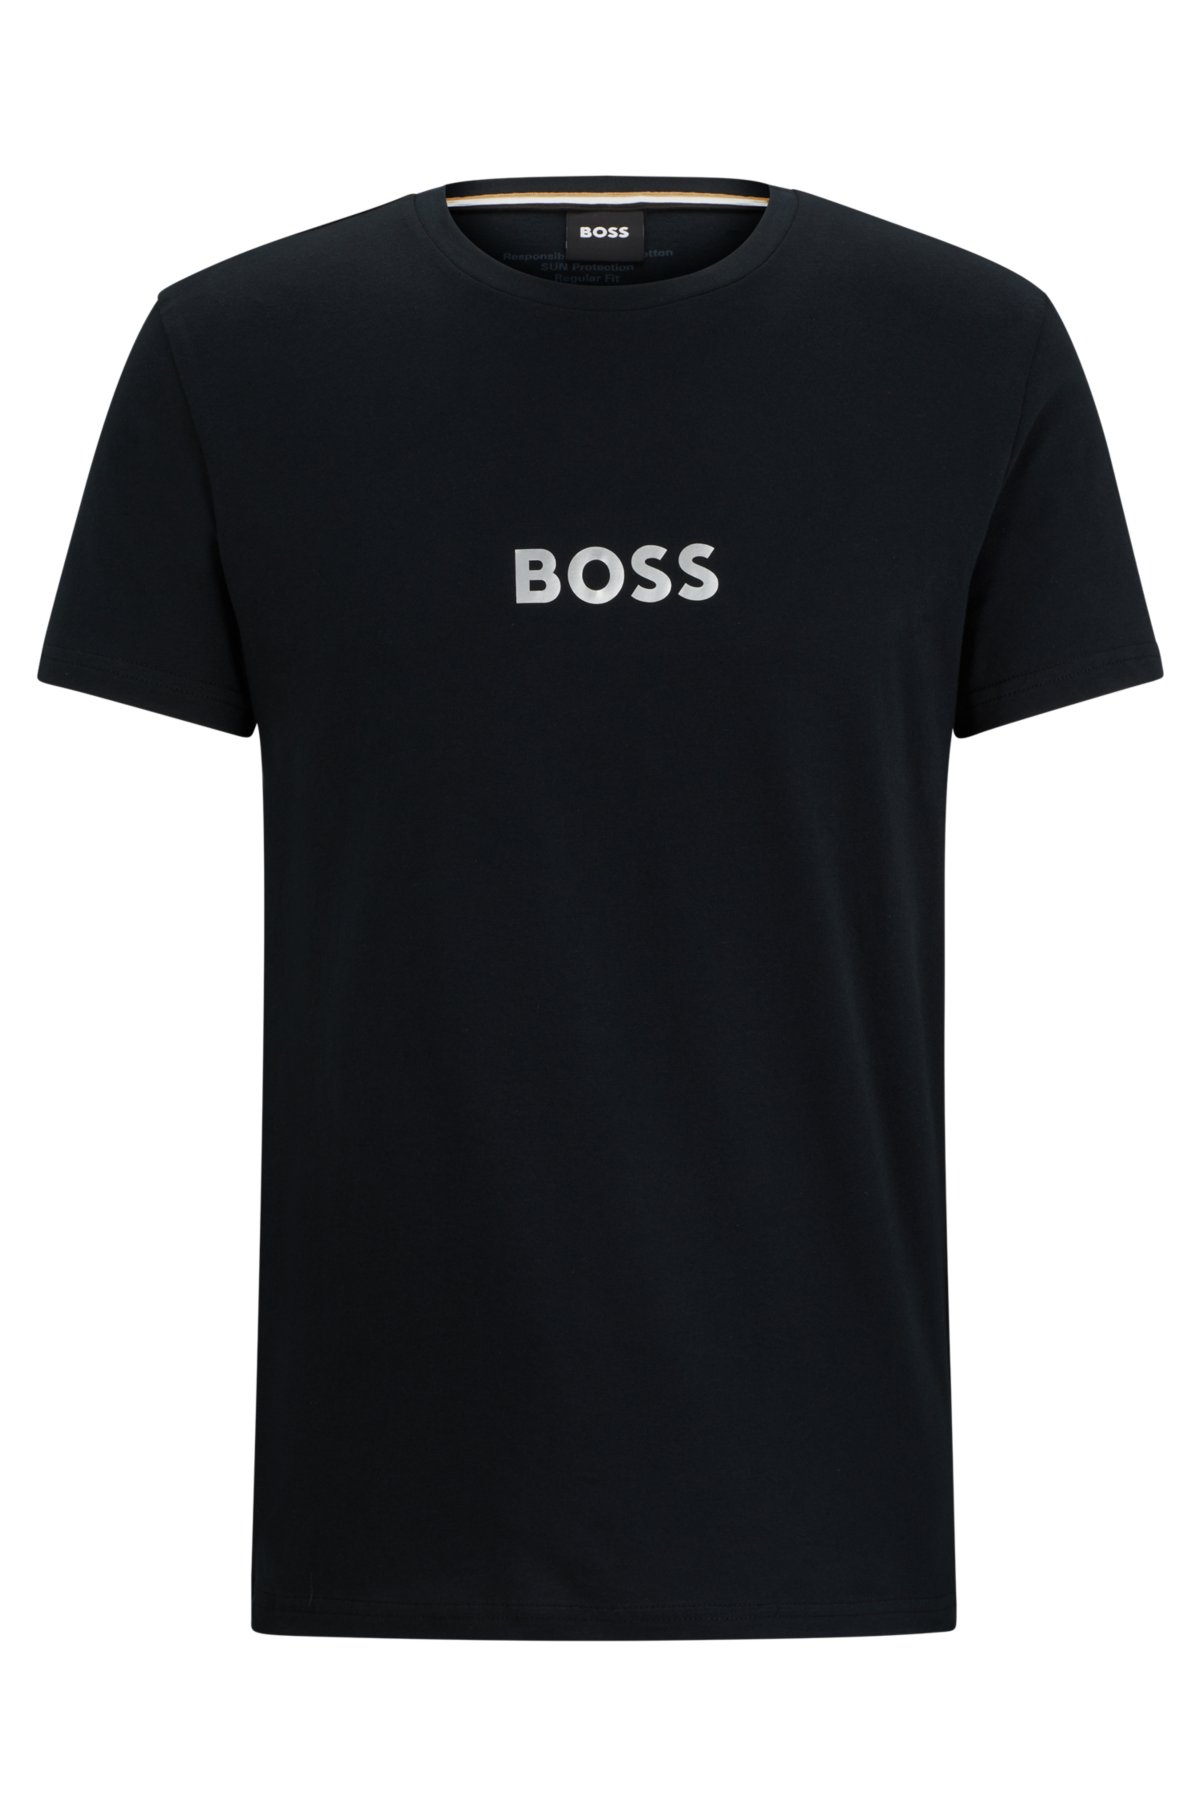 Boss Special Logo T-Shirt - Black - Size S